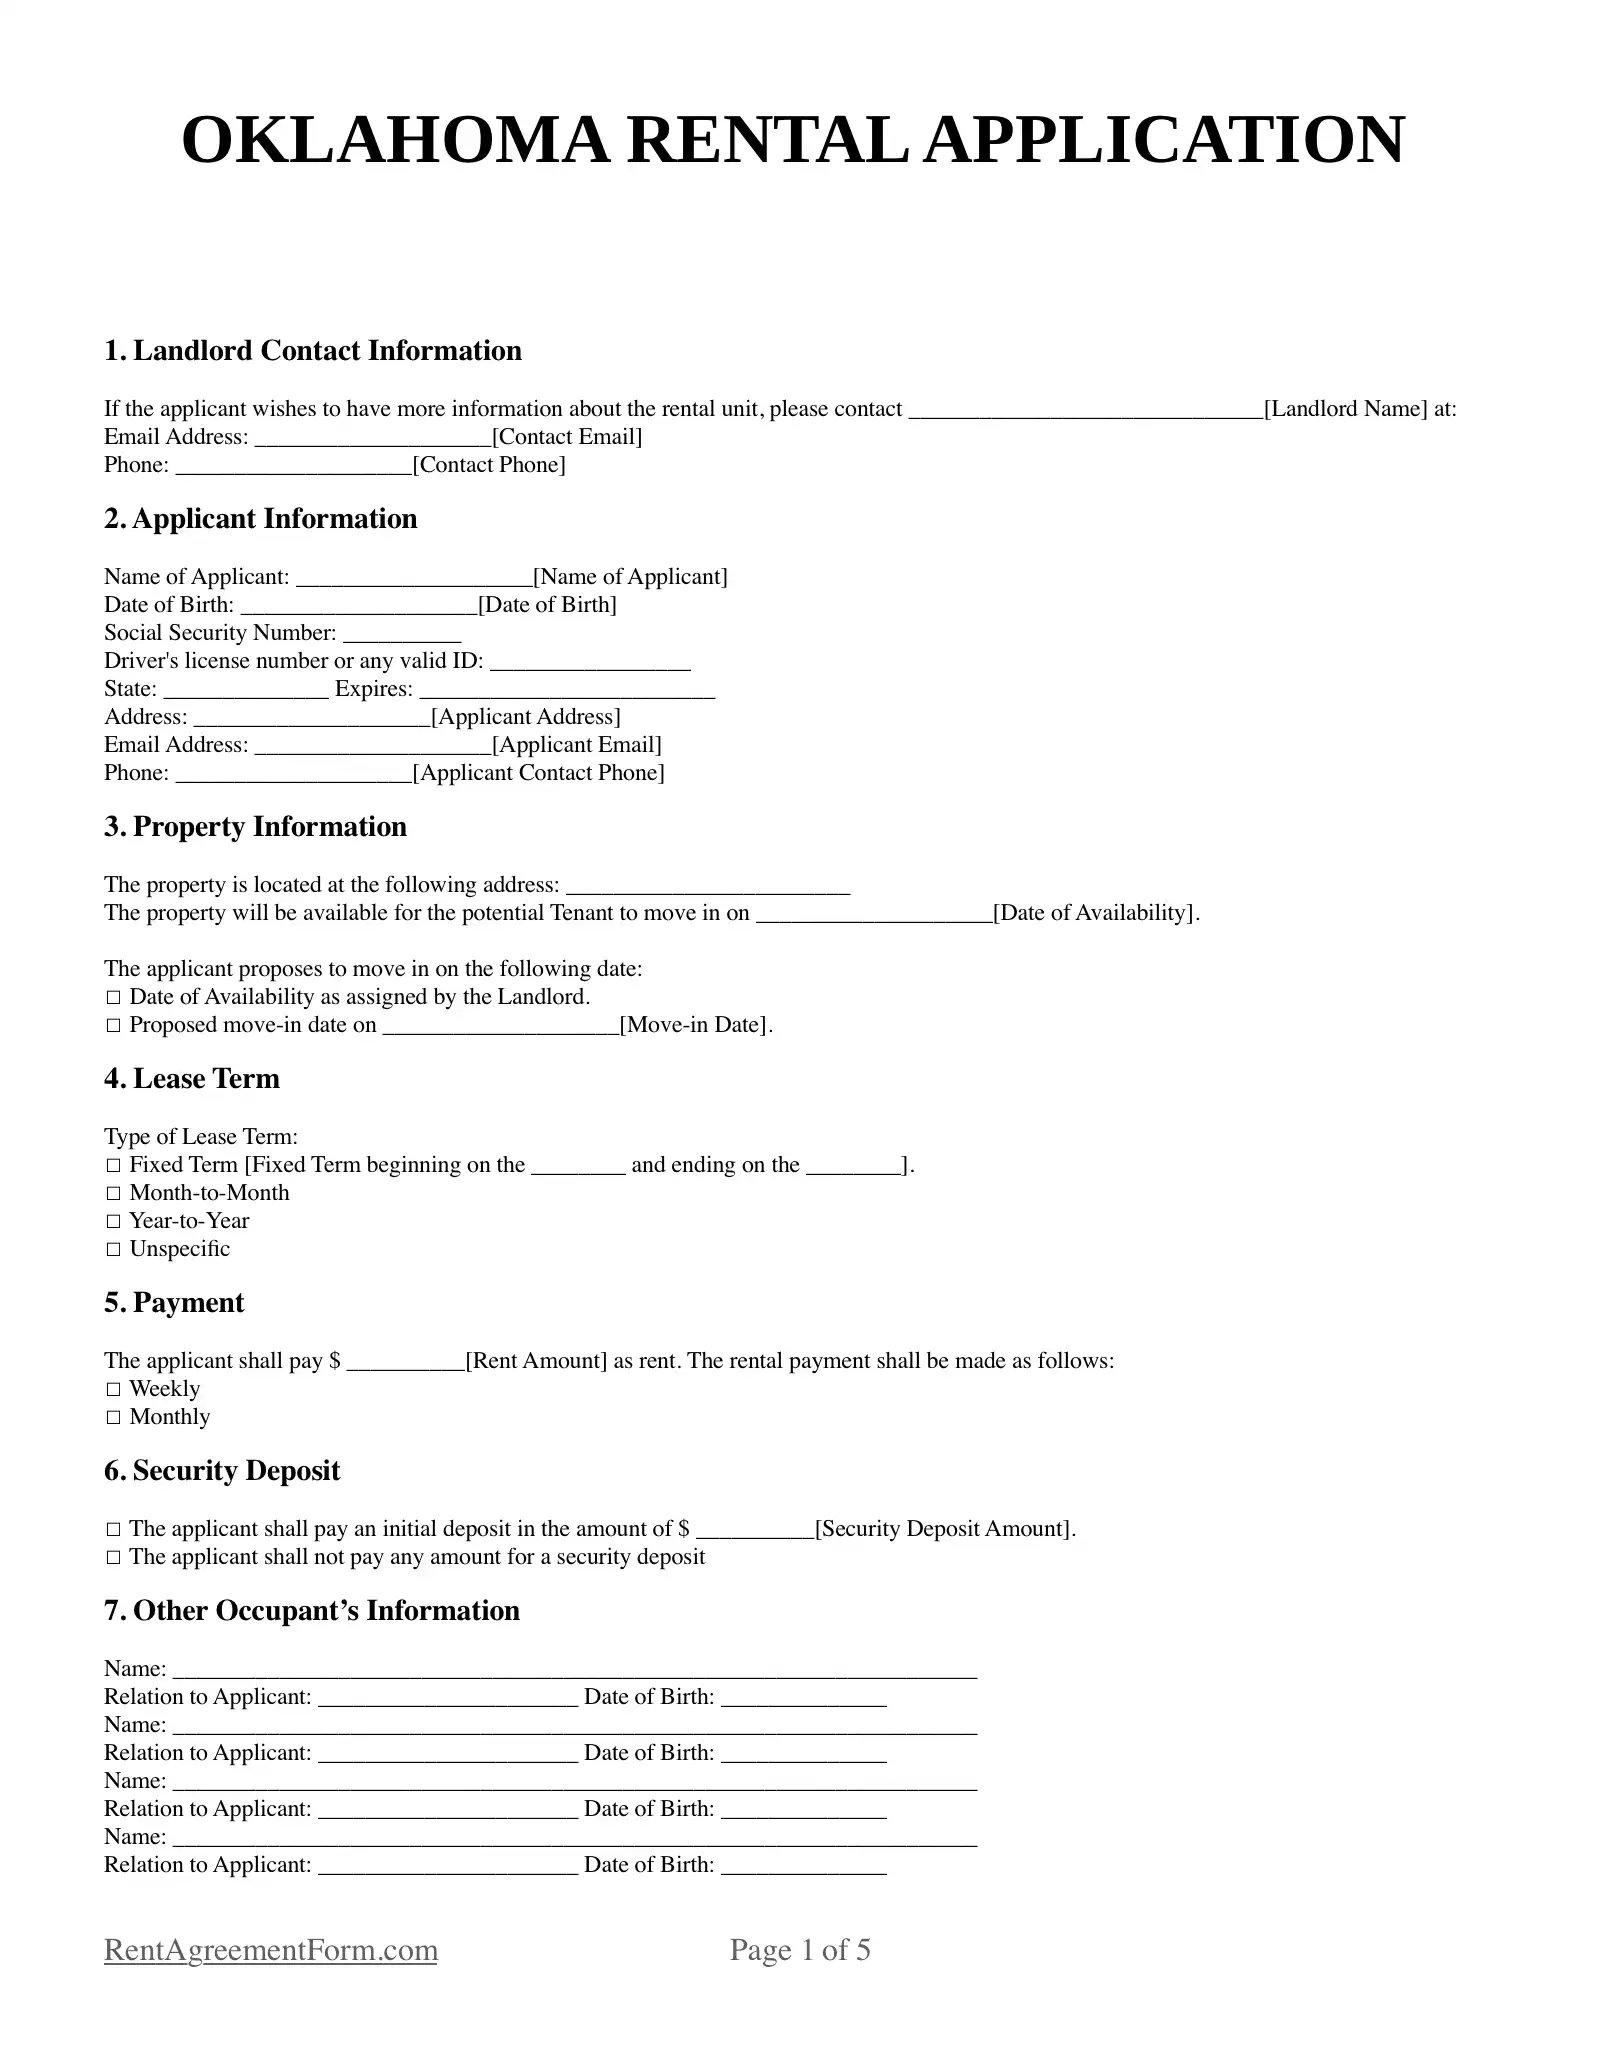 Oklahoma Rental Application Sample